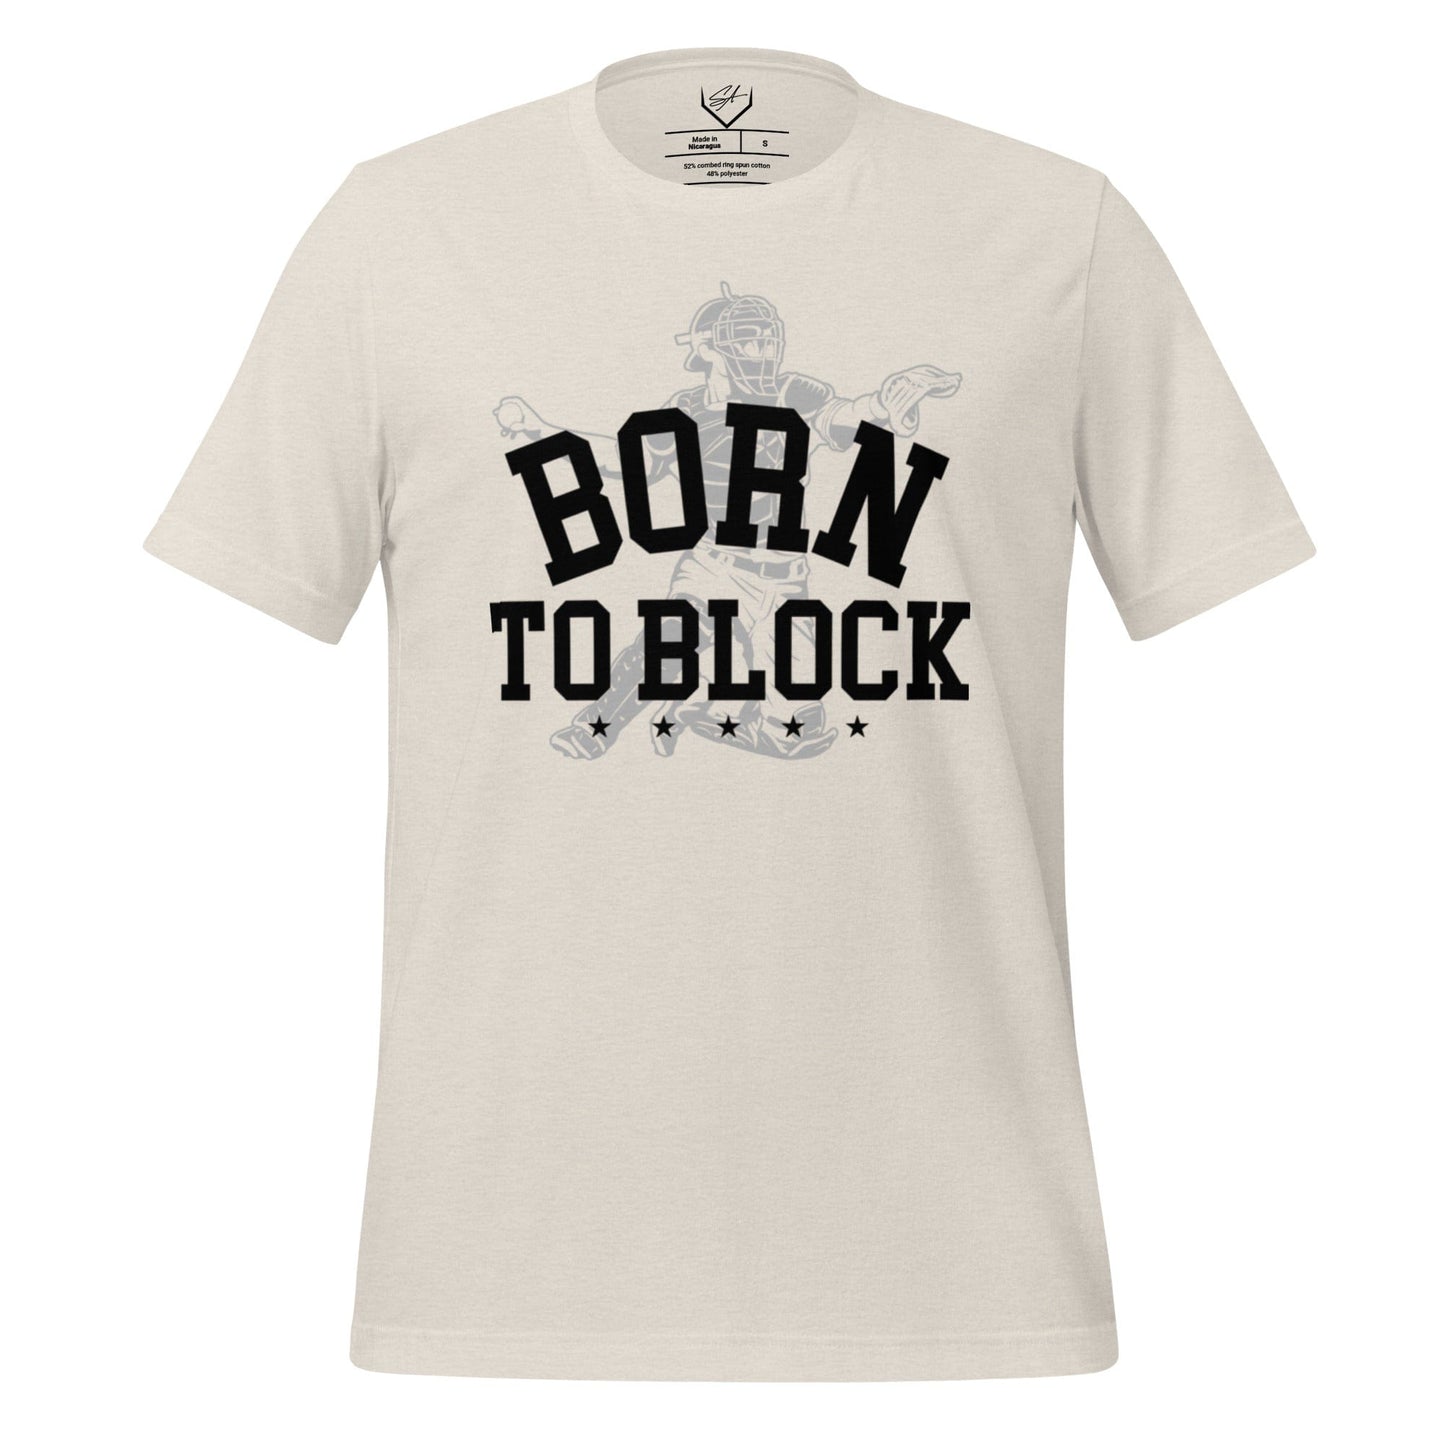 Born To Block - Adult Tee